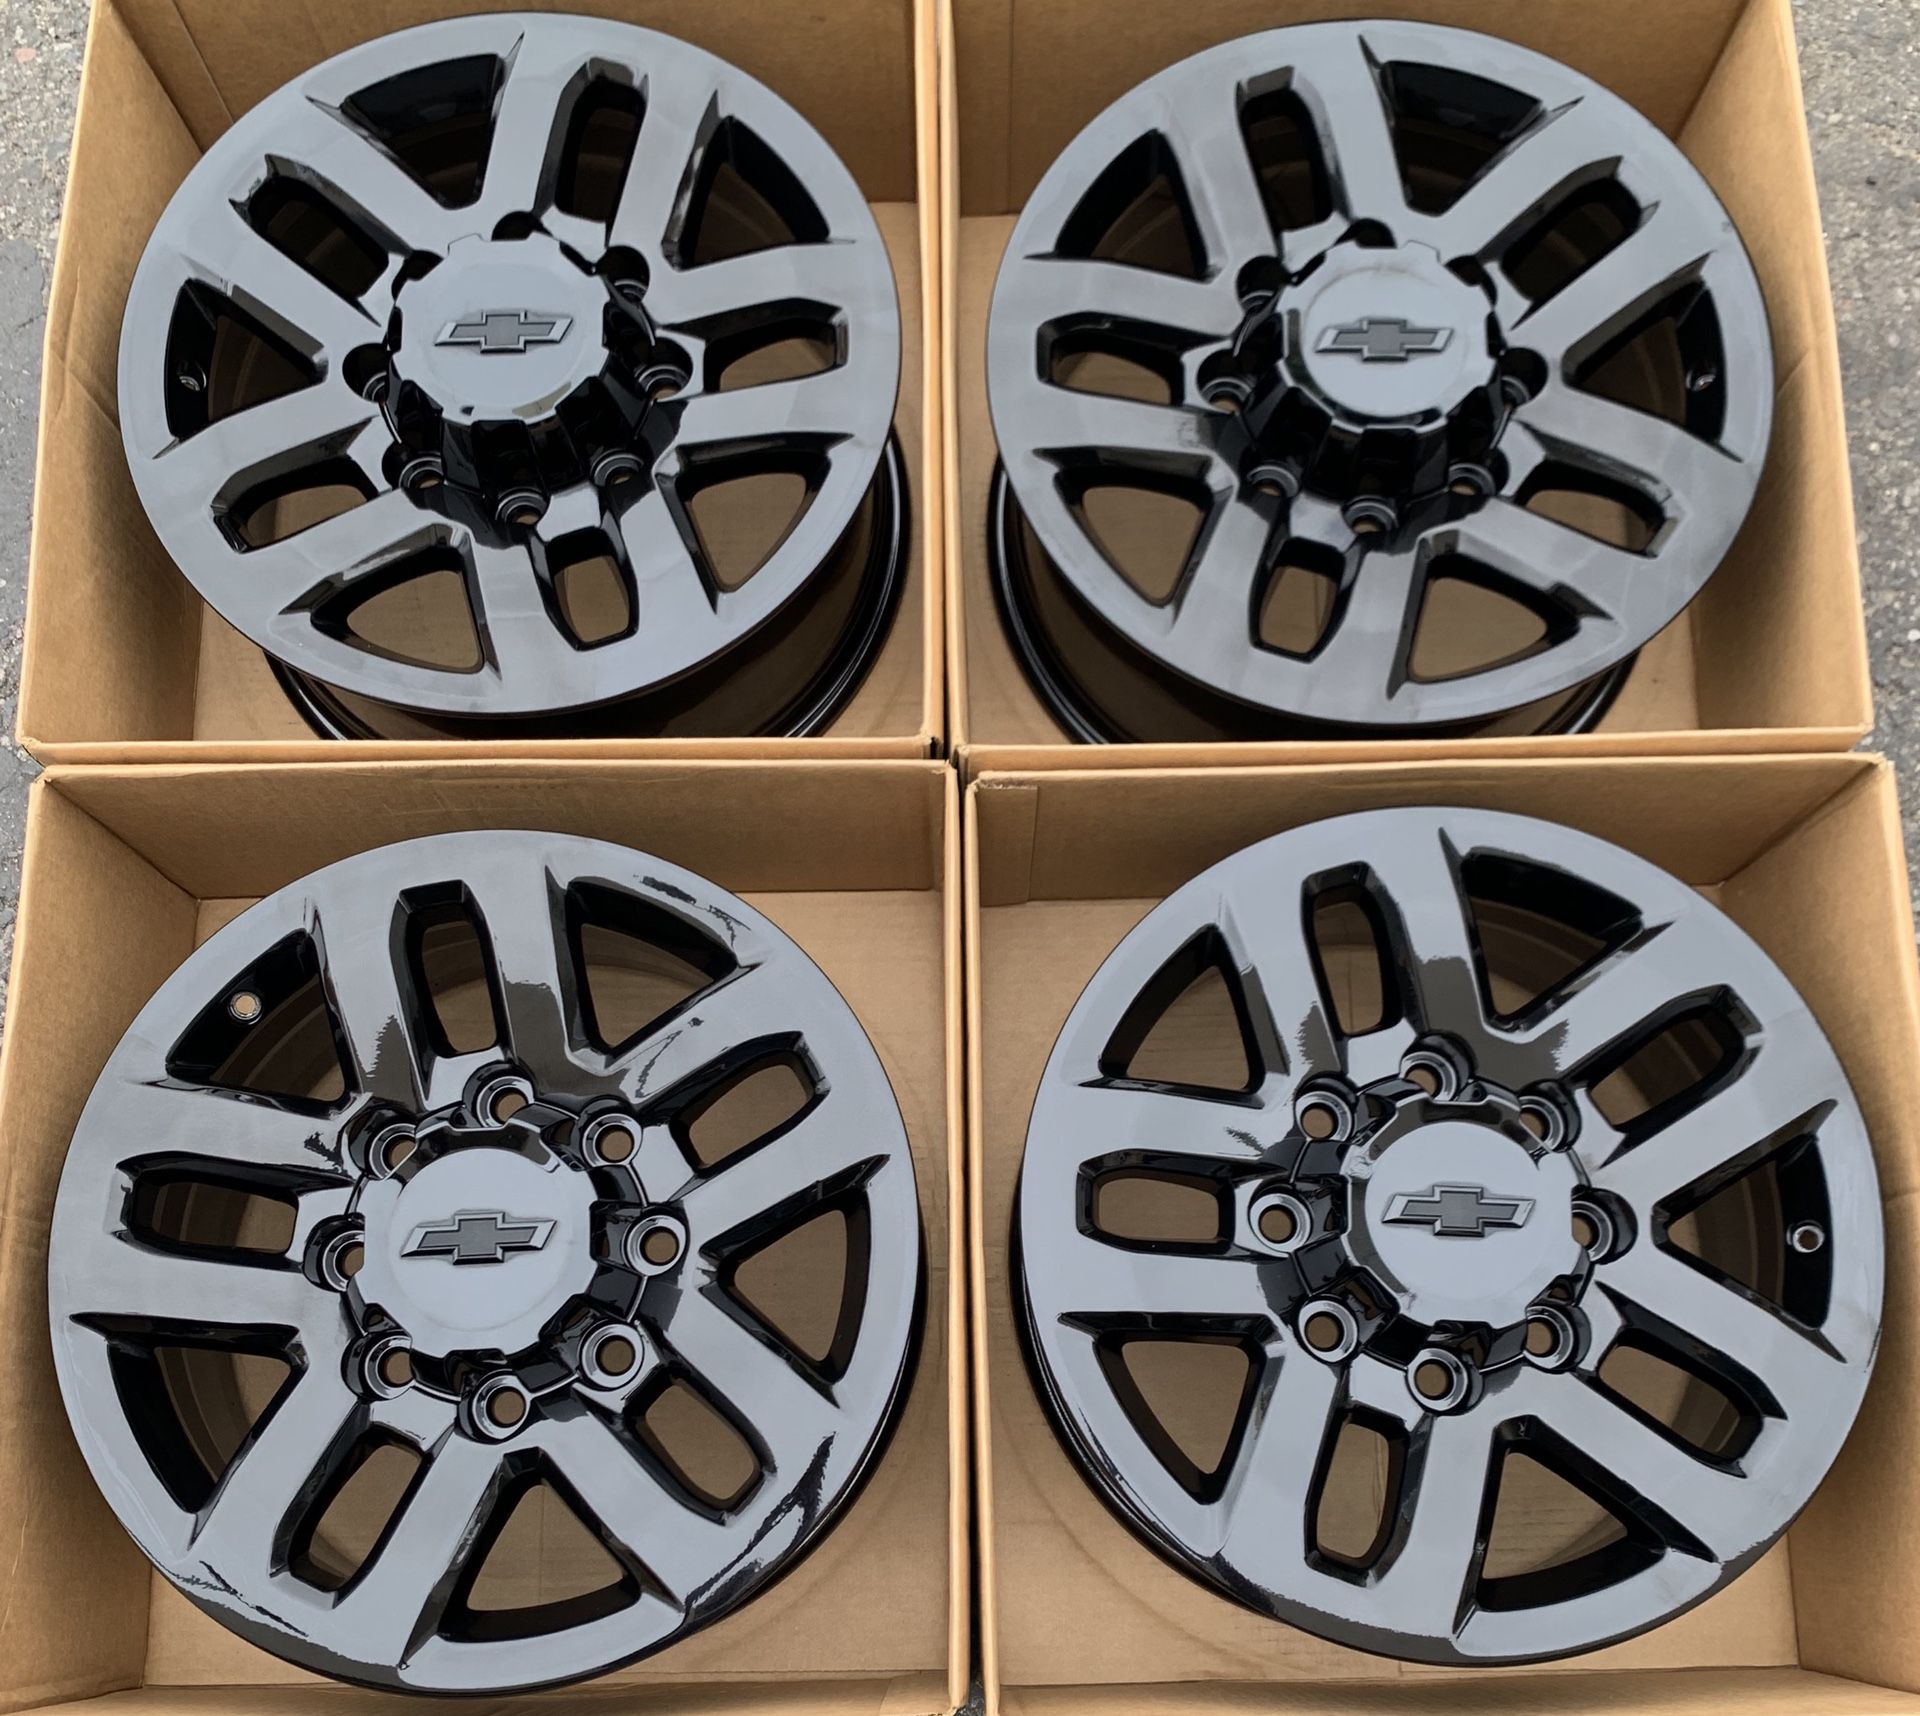 18” Chevy Silverado factory wheels rims gloss black new